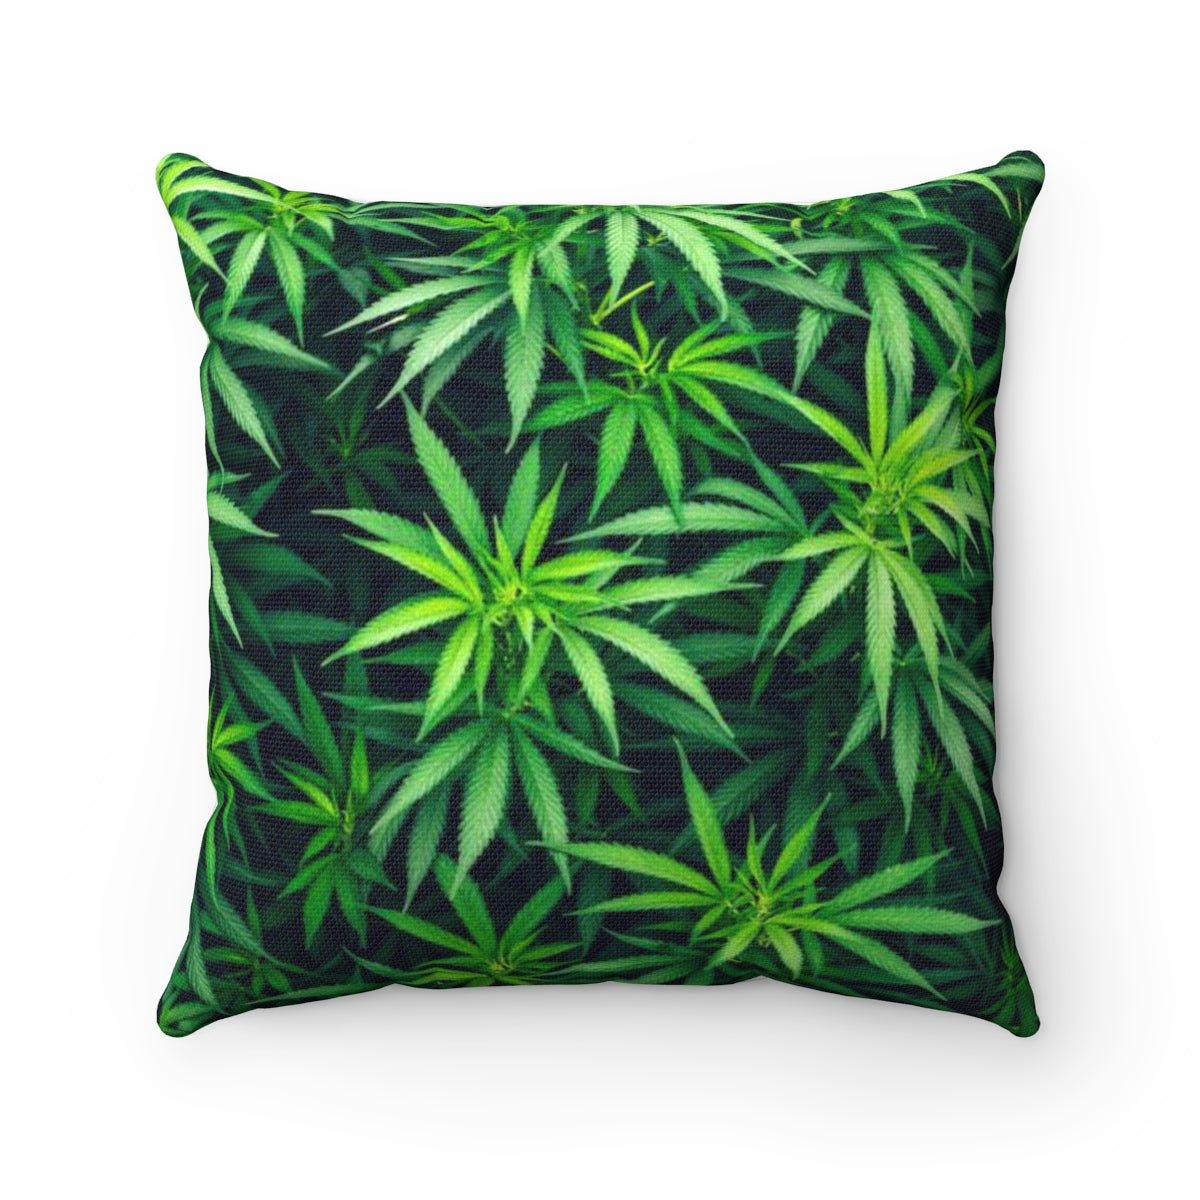 My Cannabis Spun Polyester Square Pillow